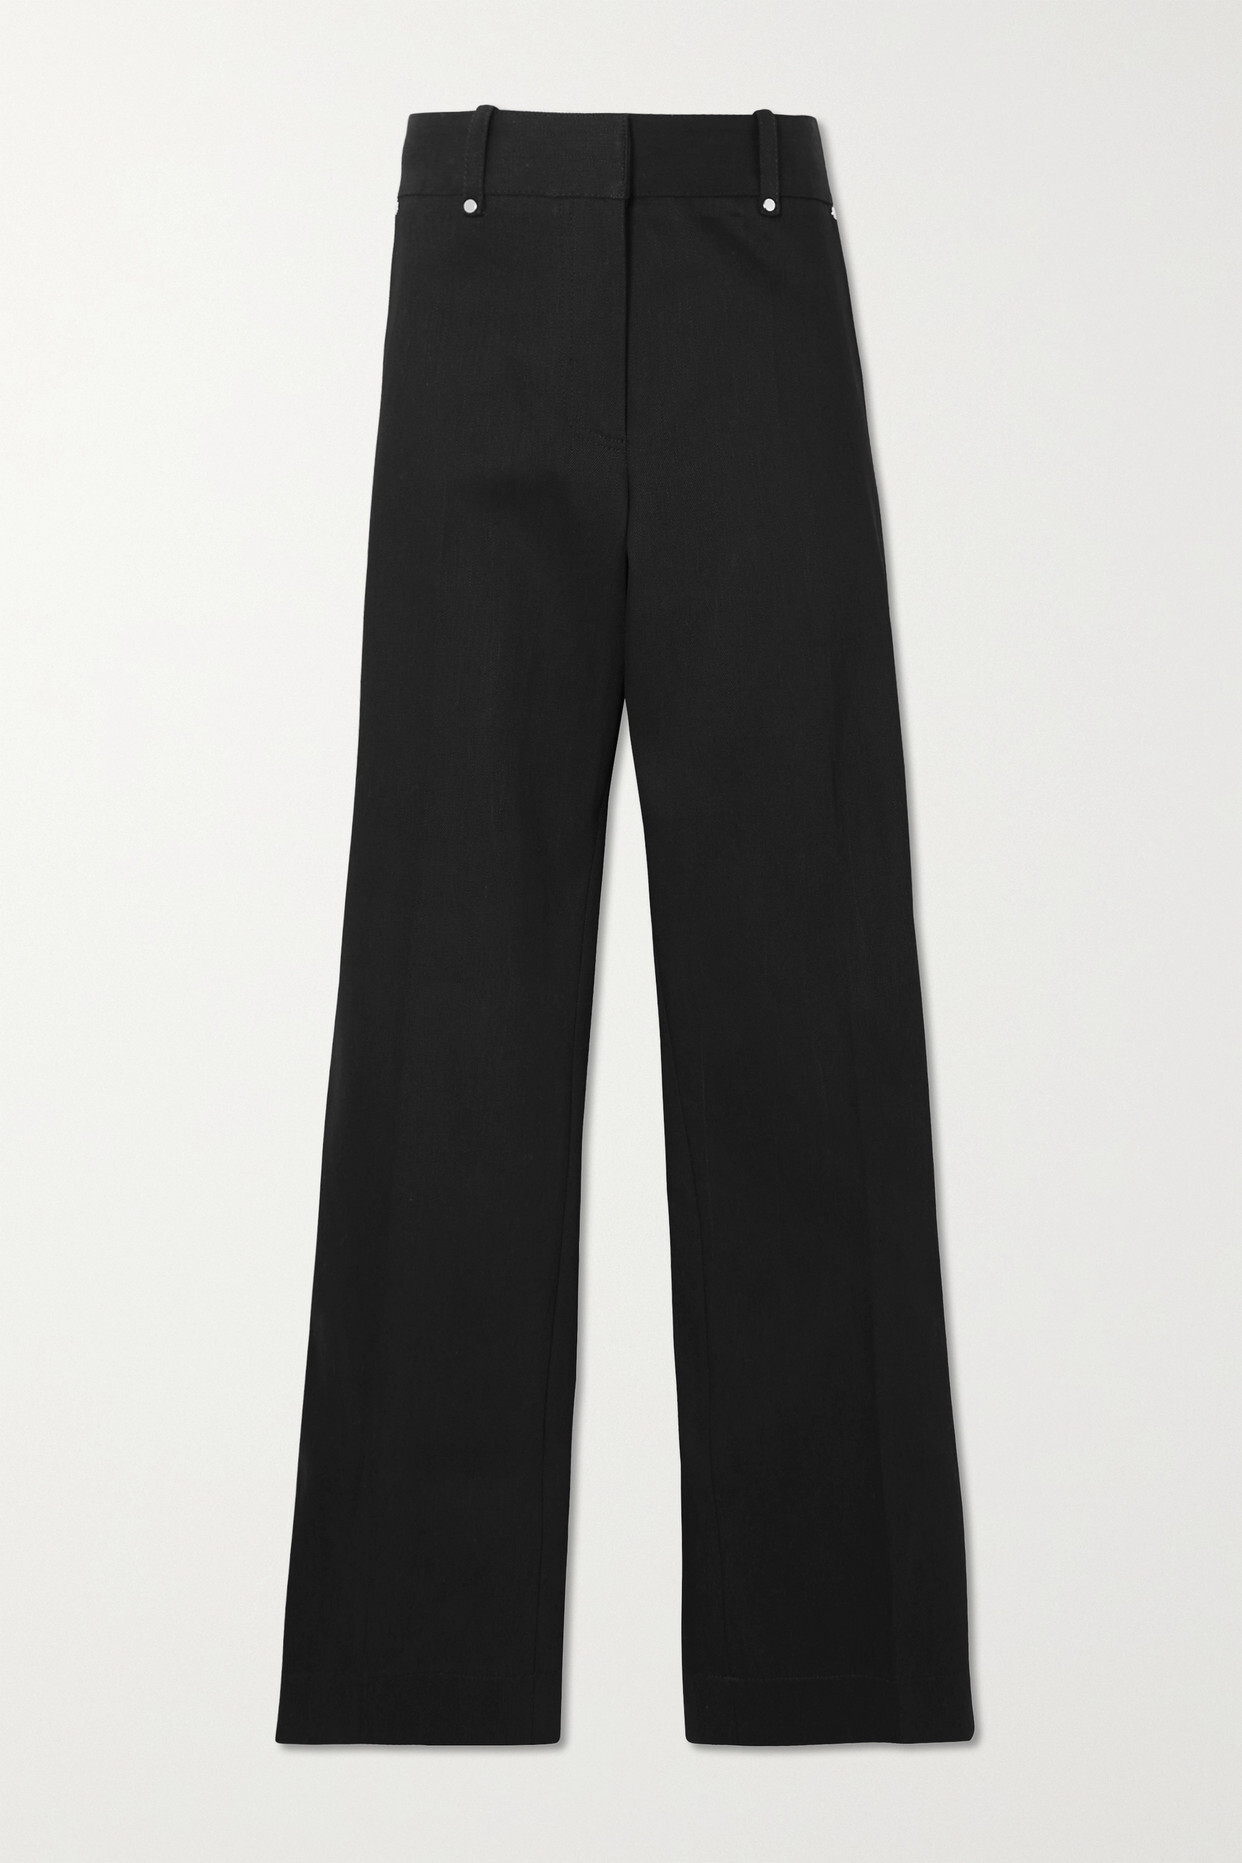 JW Anderson - Cotton-blend Twill Straight-leg Pants - Black